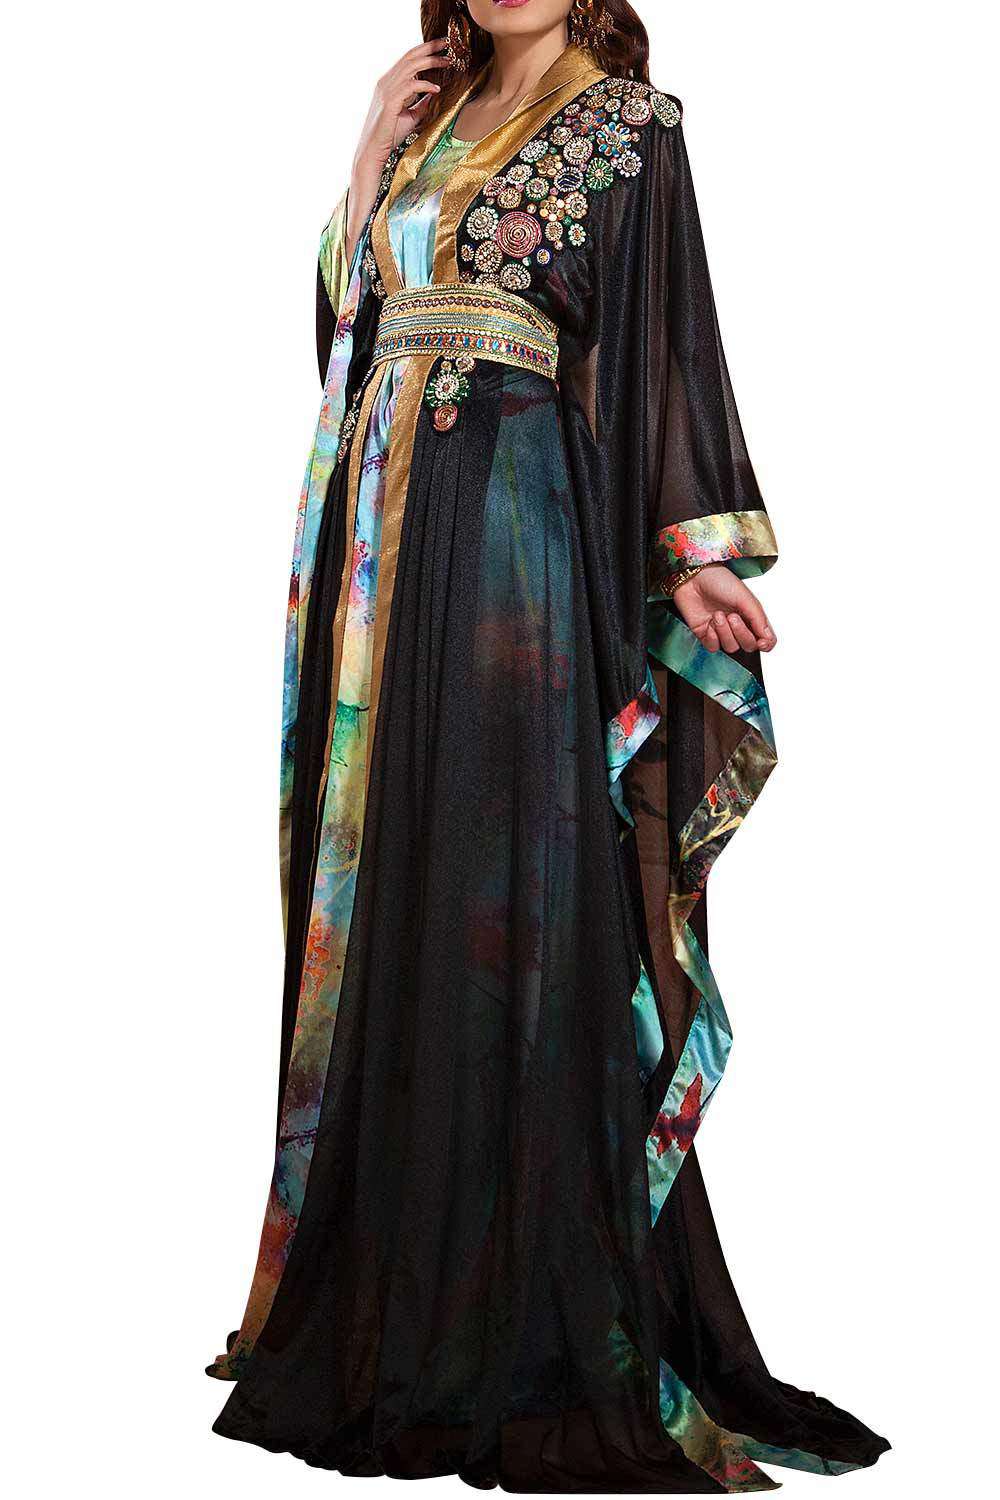 Trendy Beautiful Gulf Trend Pastel & Black Color Party Wear Dubai Style Moroccan Kaftan